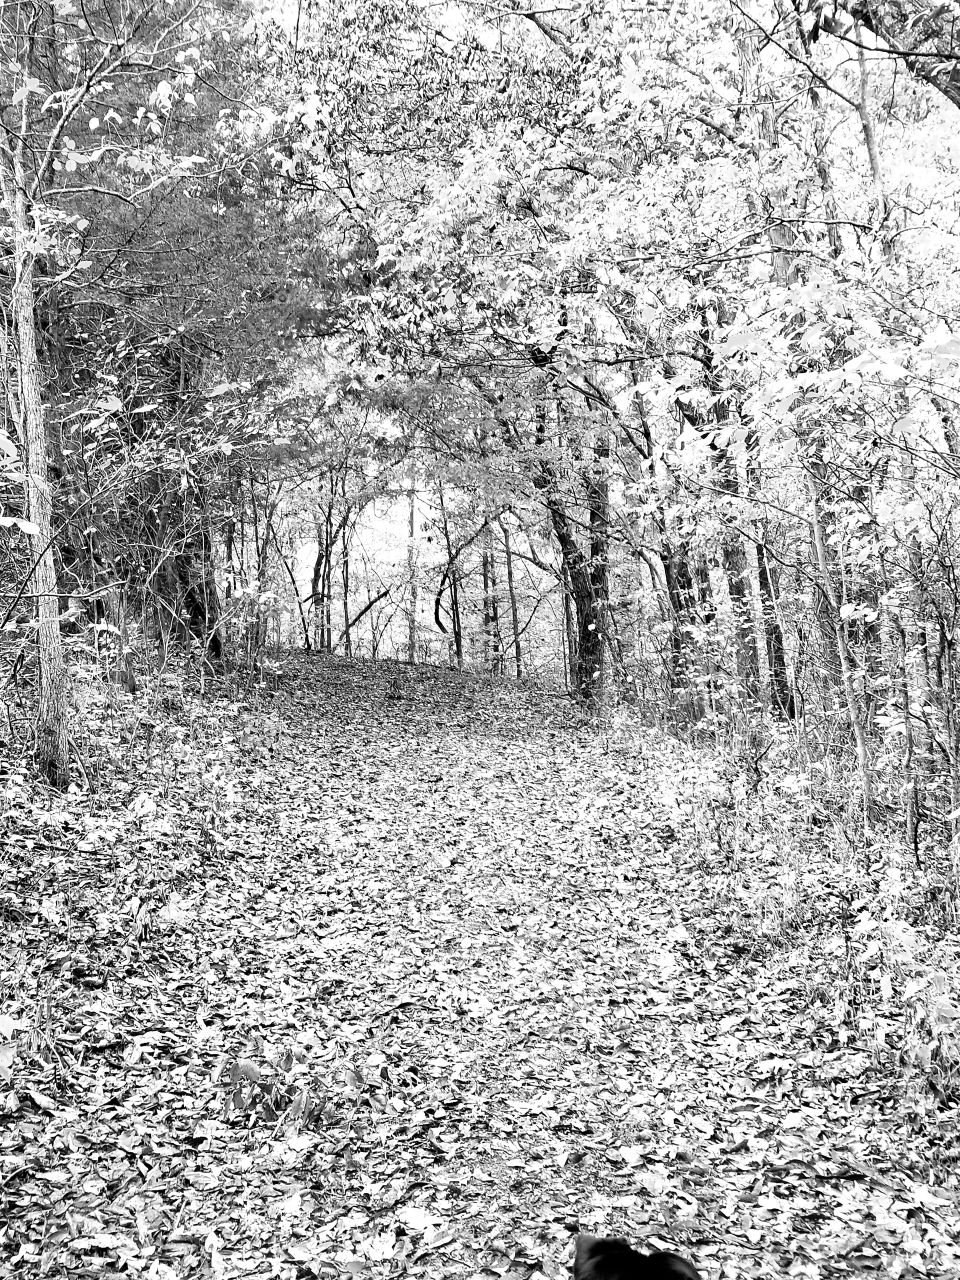 creepy path through the woods